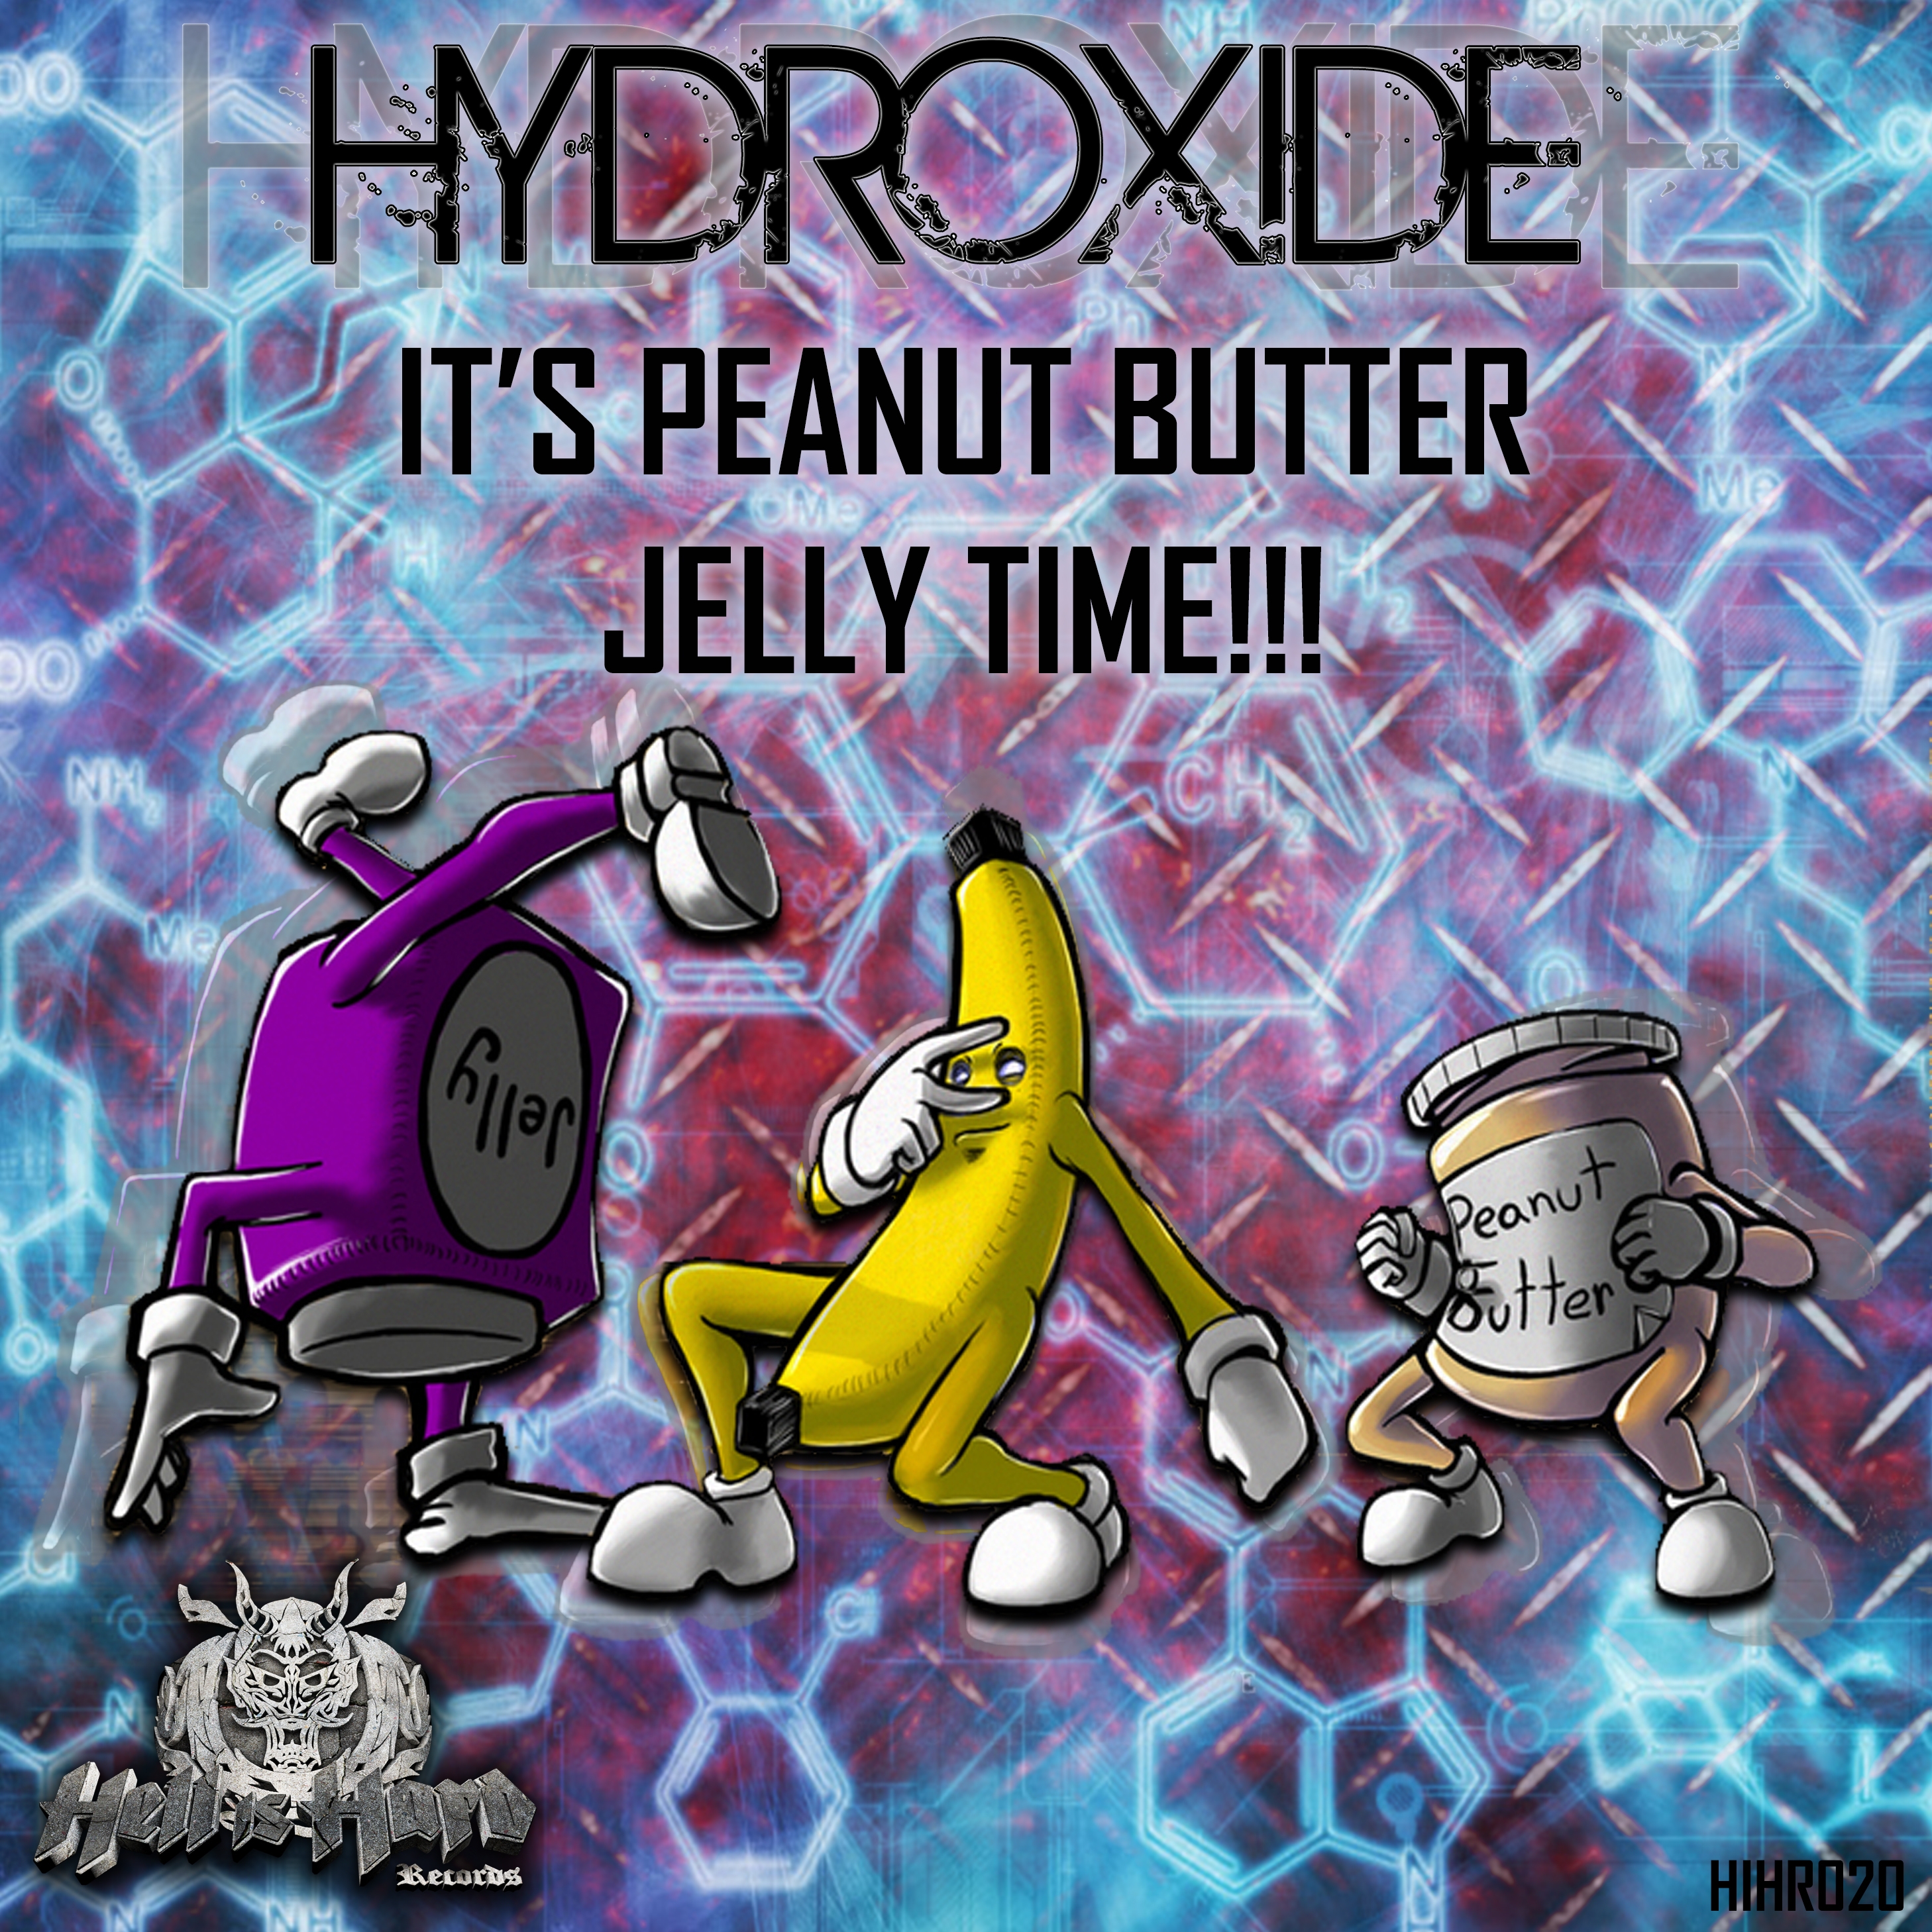 Peanut jelly time. Jelly time. It's Peanut Butter Jelly time. Peanut Butter Jelly time. Its Peanut Butter Jelly time Peanut Butter Jelly time.